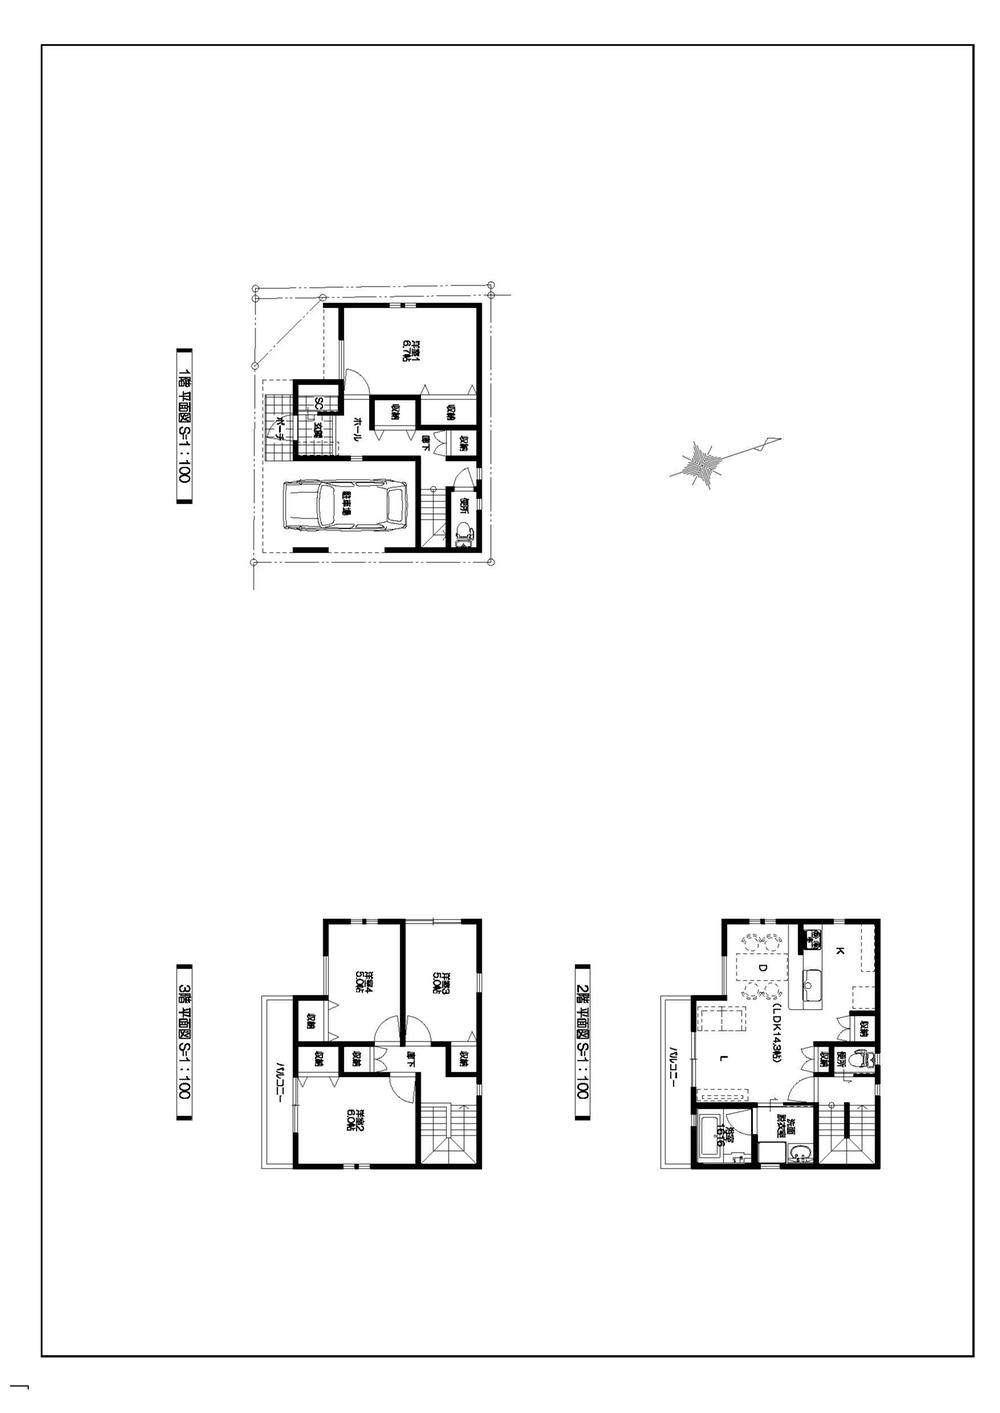 Building plan example (floor plan). Building plan example (A No. land) Building price 15,750,000 yen Building area 102.07 sq m